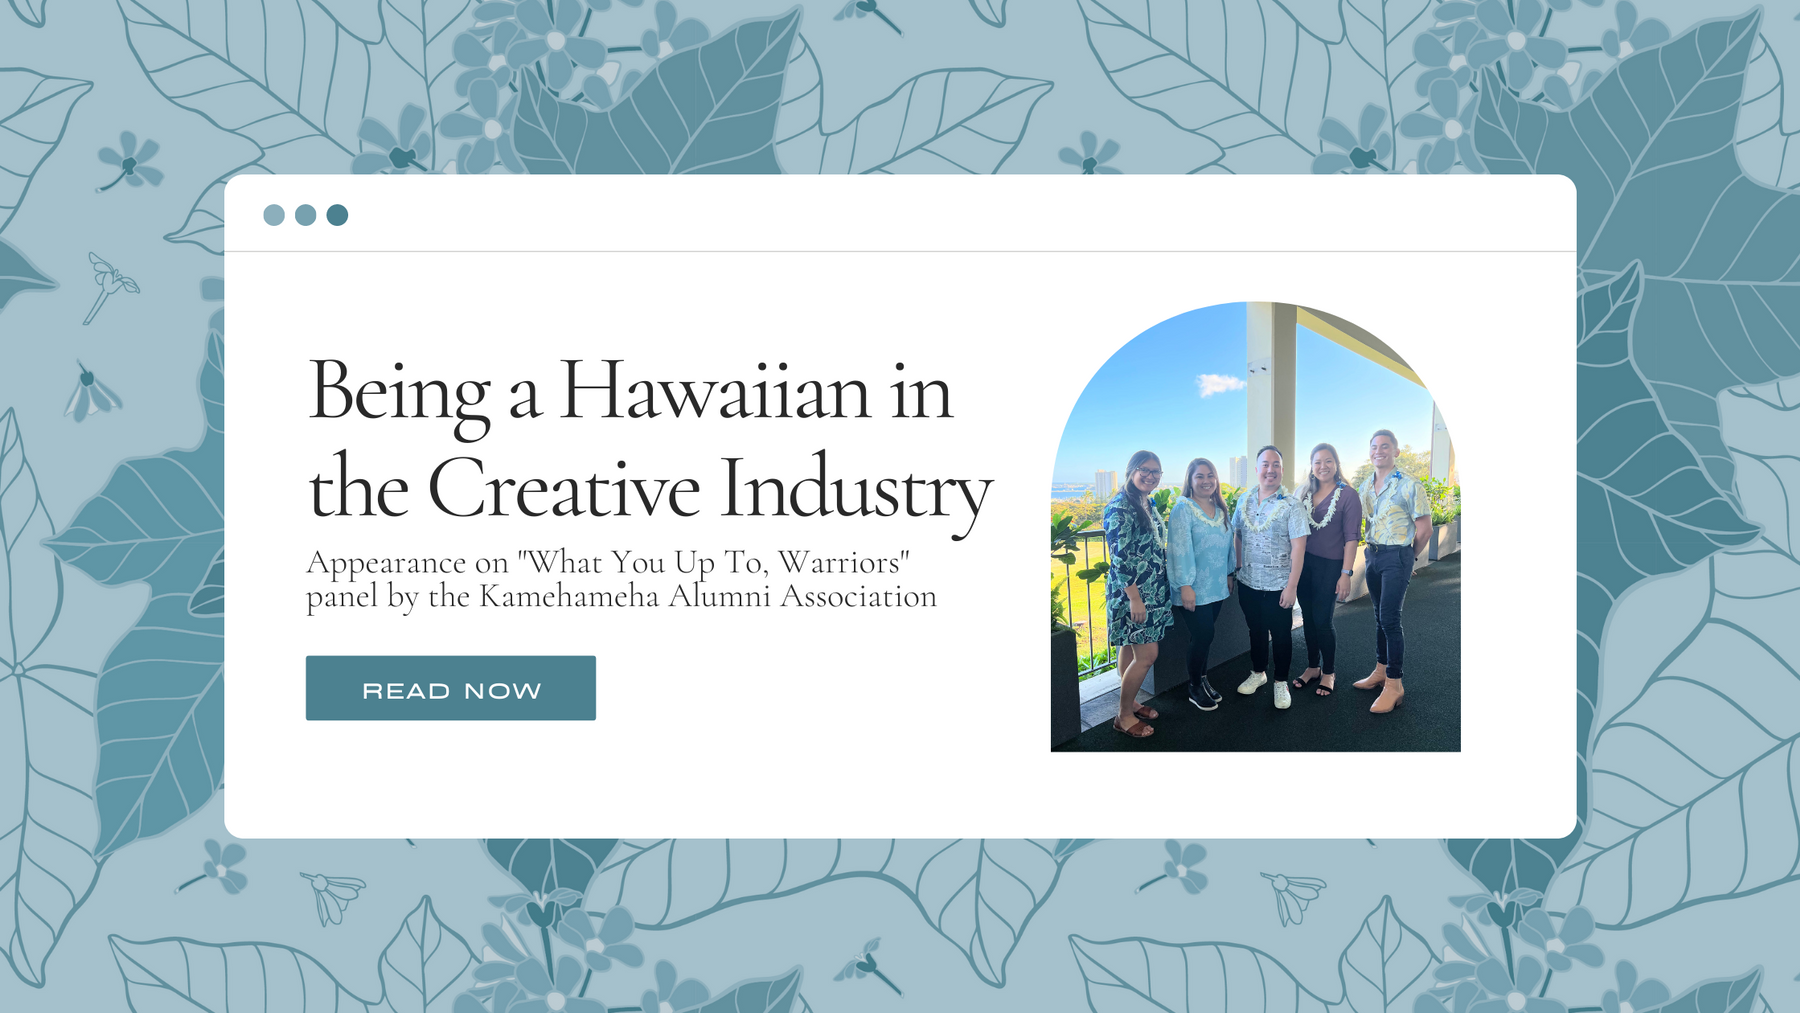 Being a Hawaiian in the Creative Industry